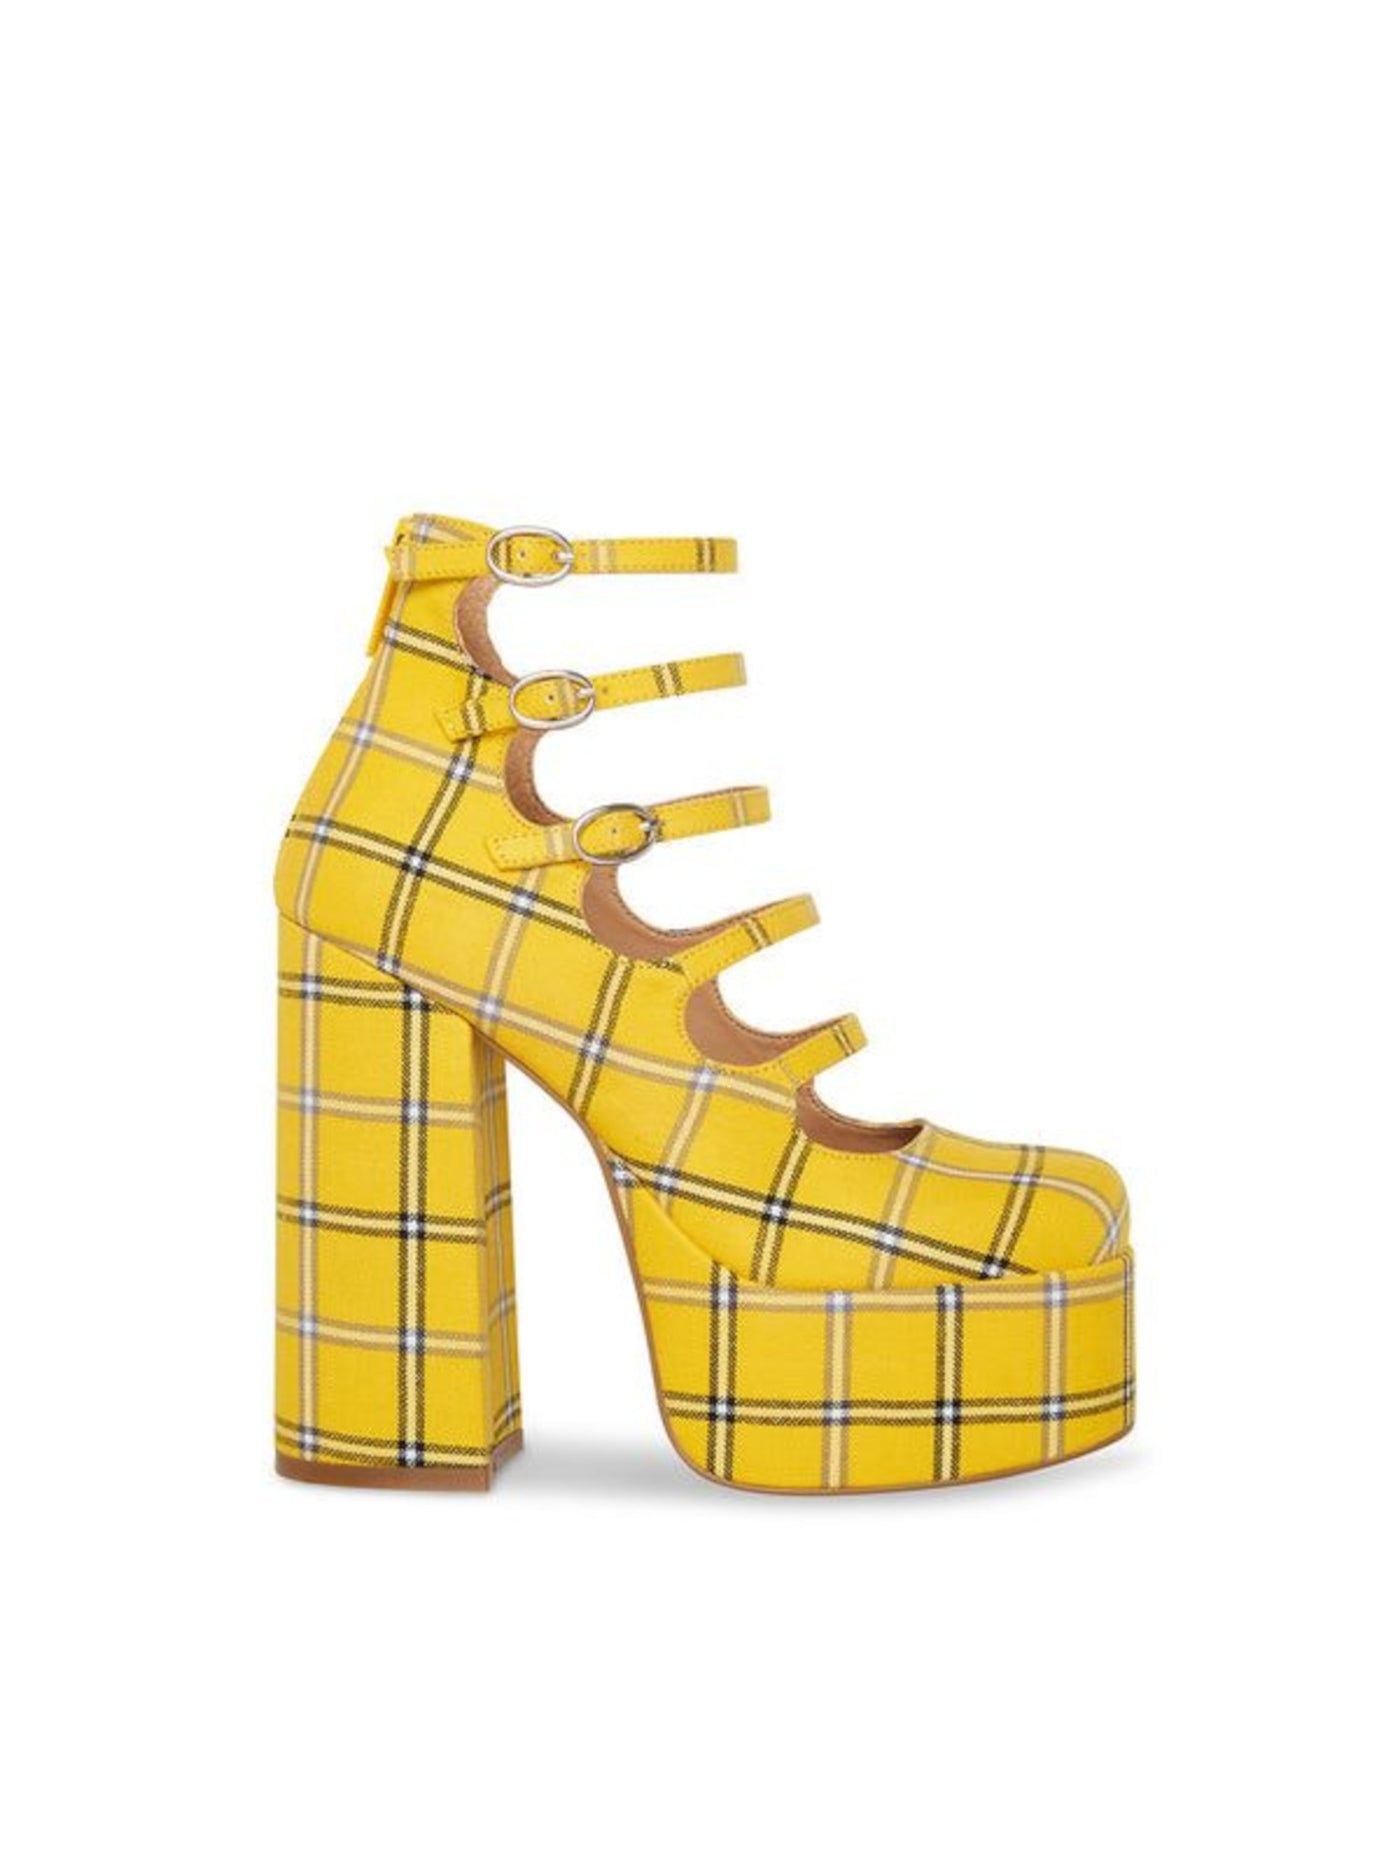 STEVE MADDEN Womens Yellow Plaid 3" Platform Adjustable Round Toe Block Heel Zip-Up Dress Pumps Shoes 7 M